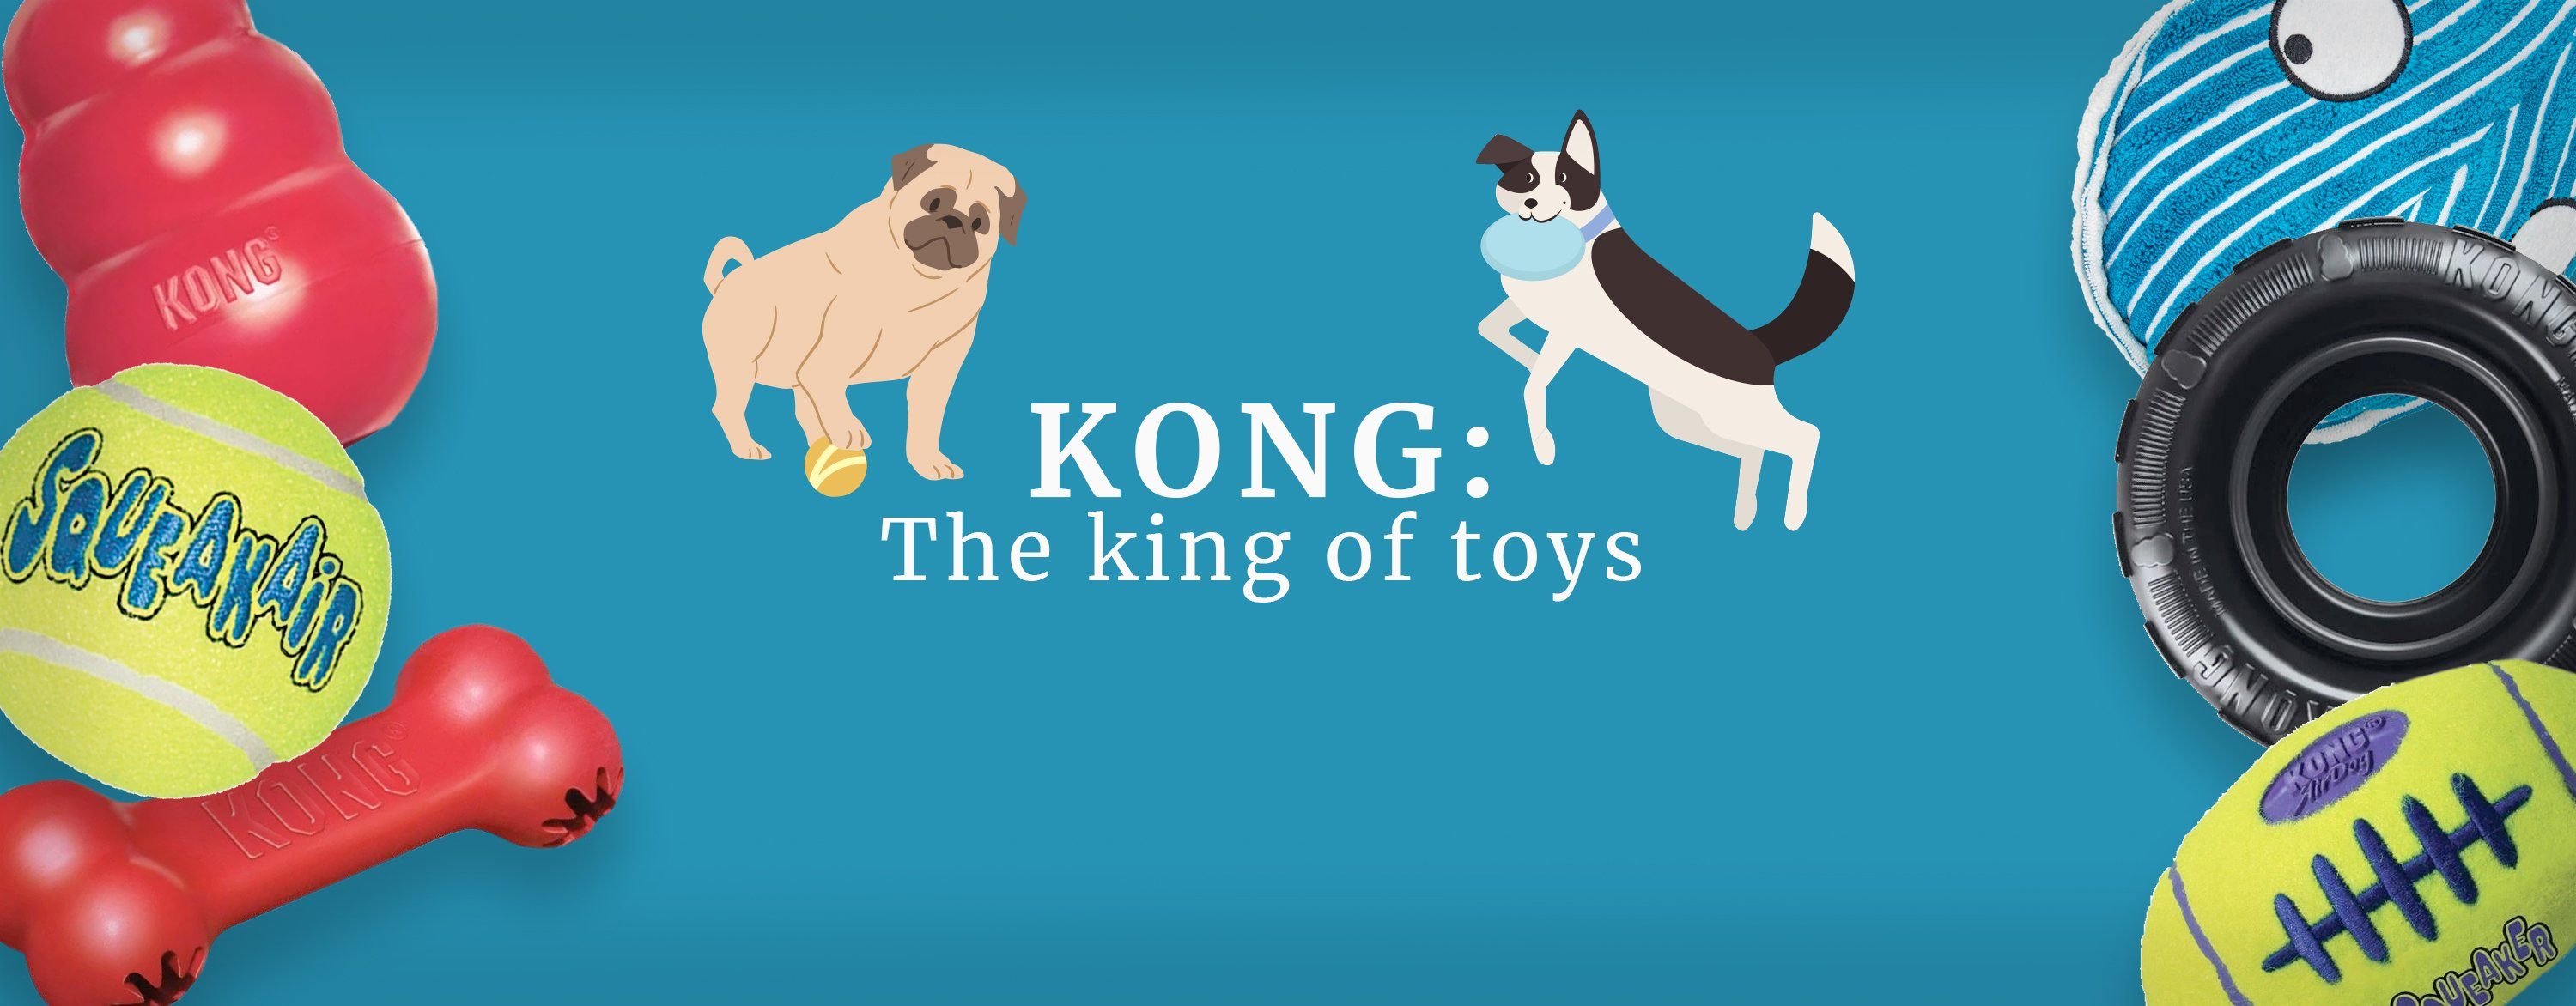 kong dog toys wholesale